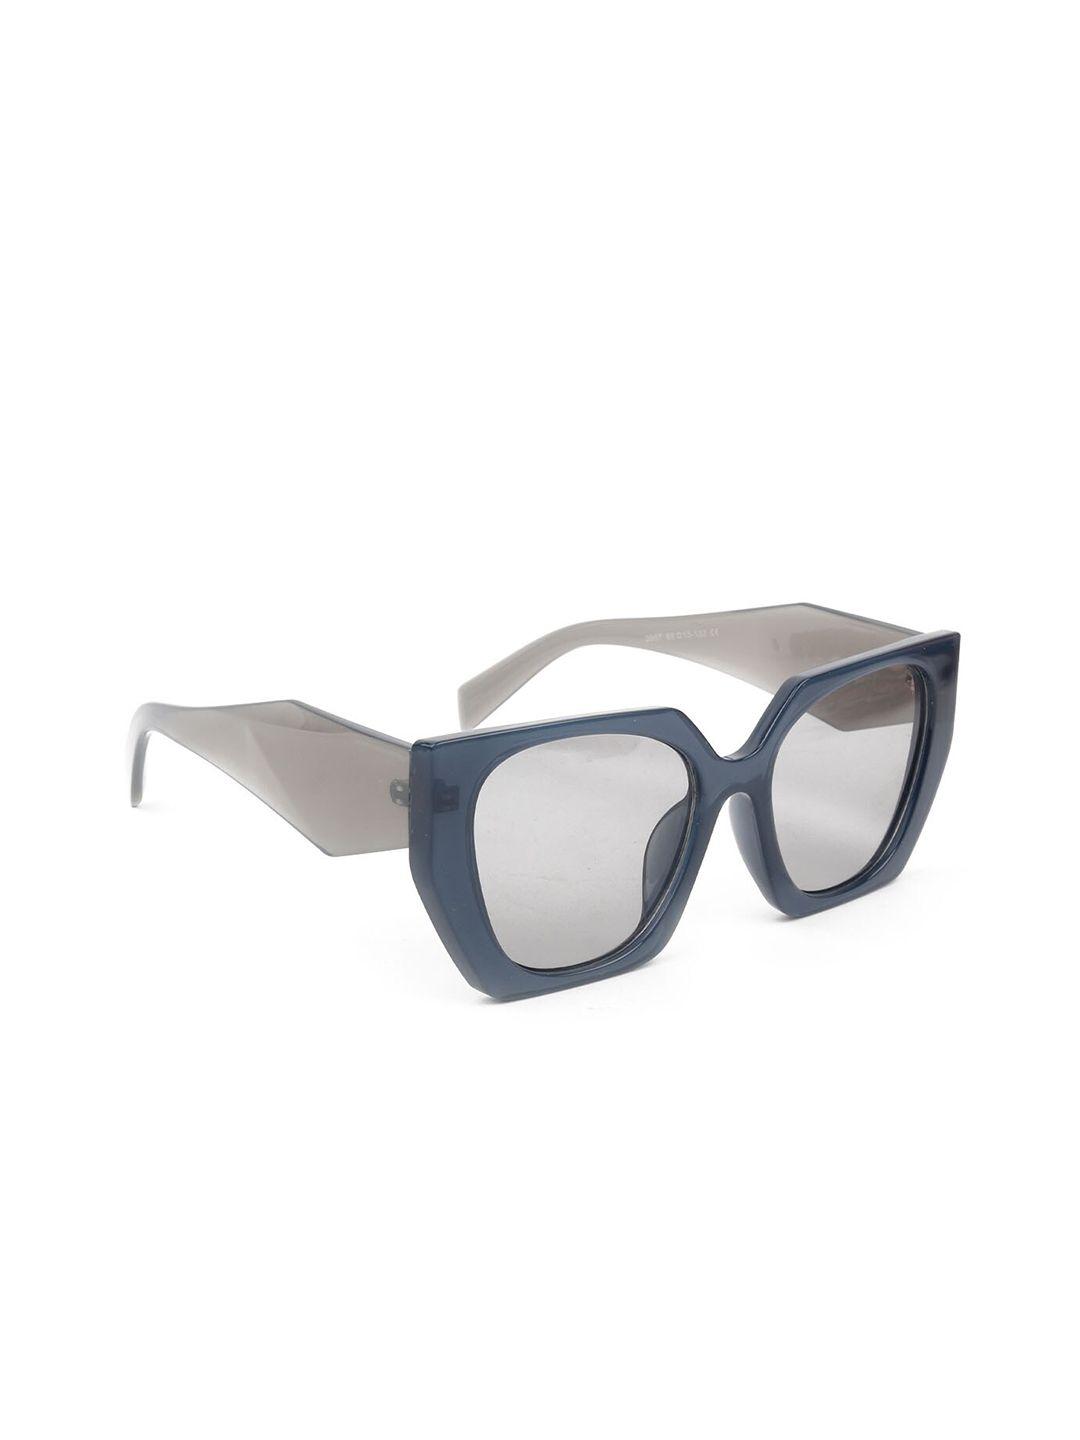 odette-women-oversized-sunglasses-with-uv-protected-lens-atm59